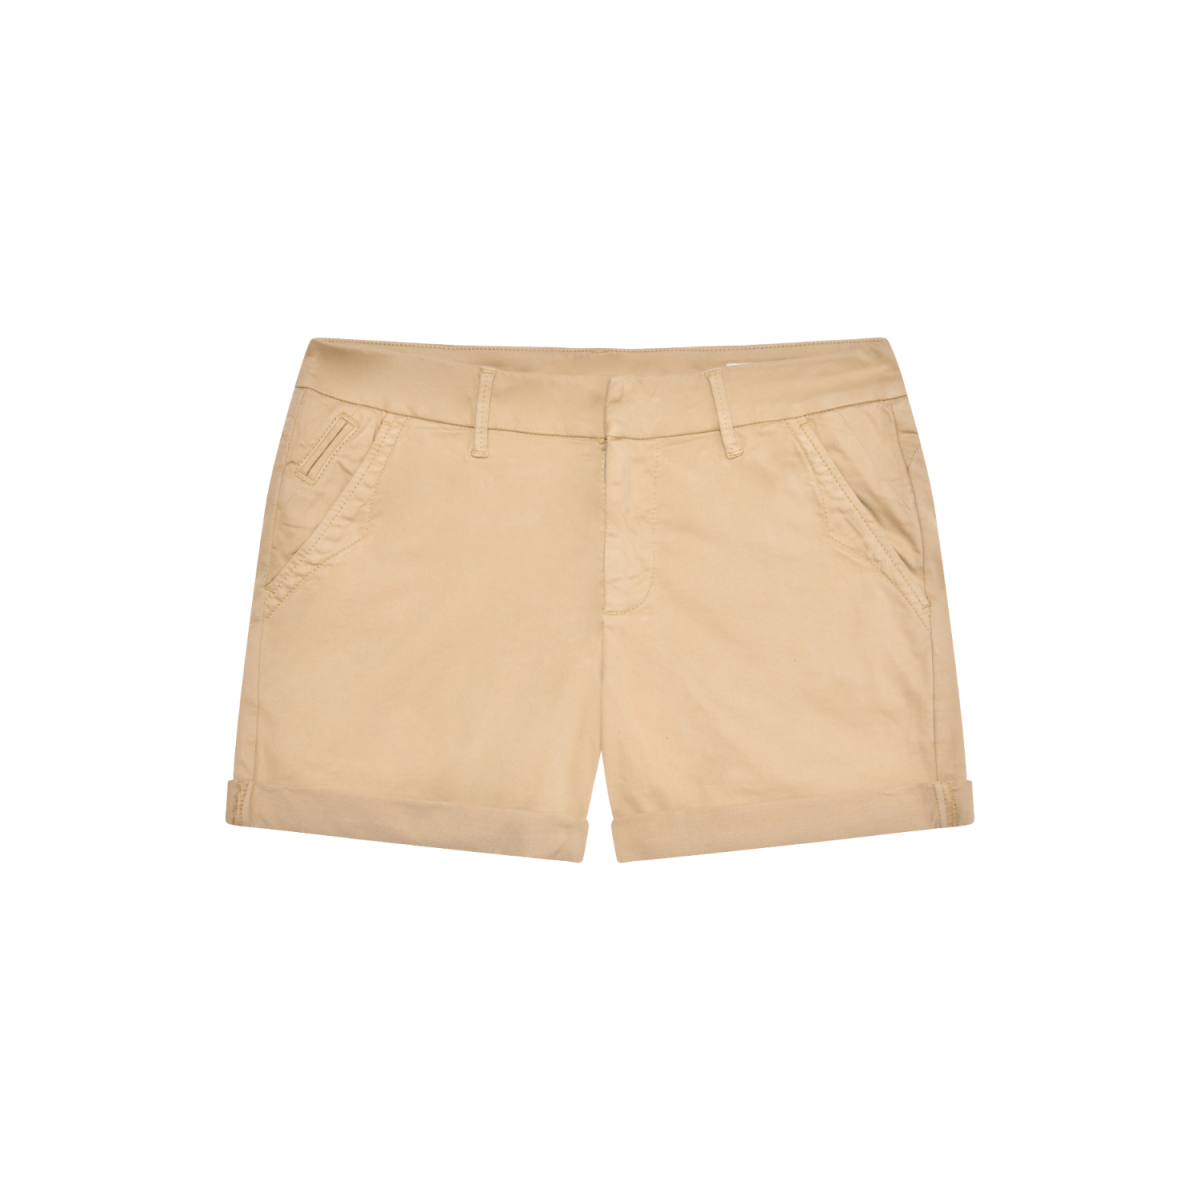 selena shorts - beige - front